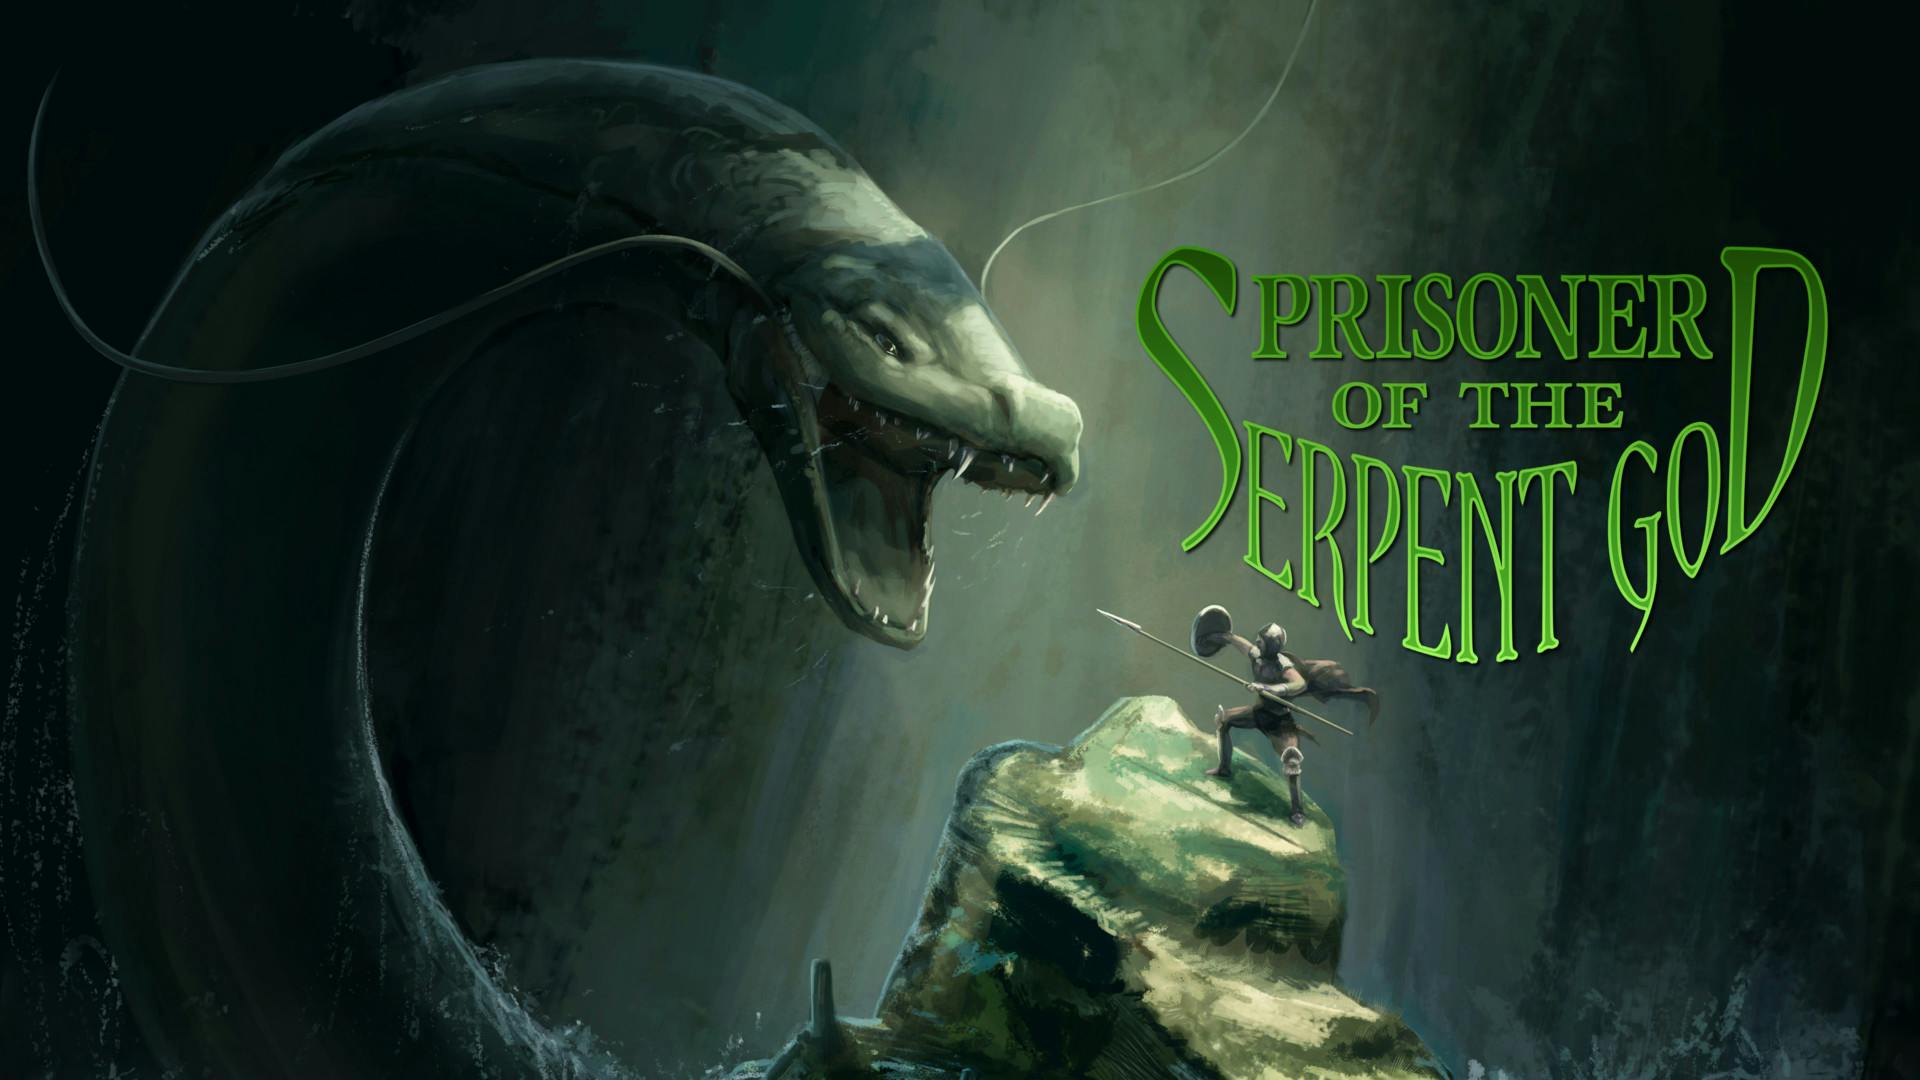 Prisoner of the Serpent God | Battle against the forces of darkness